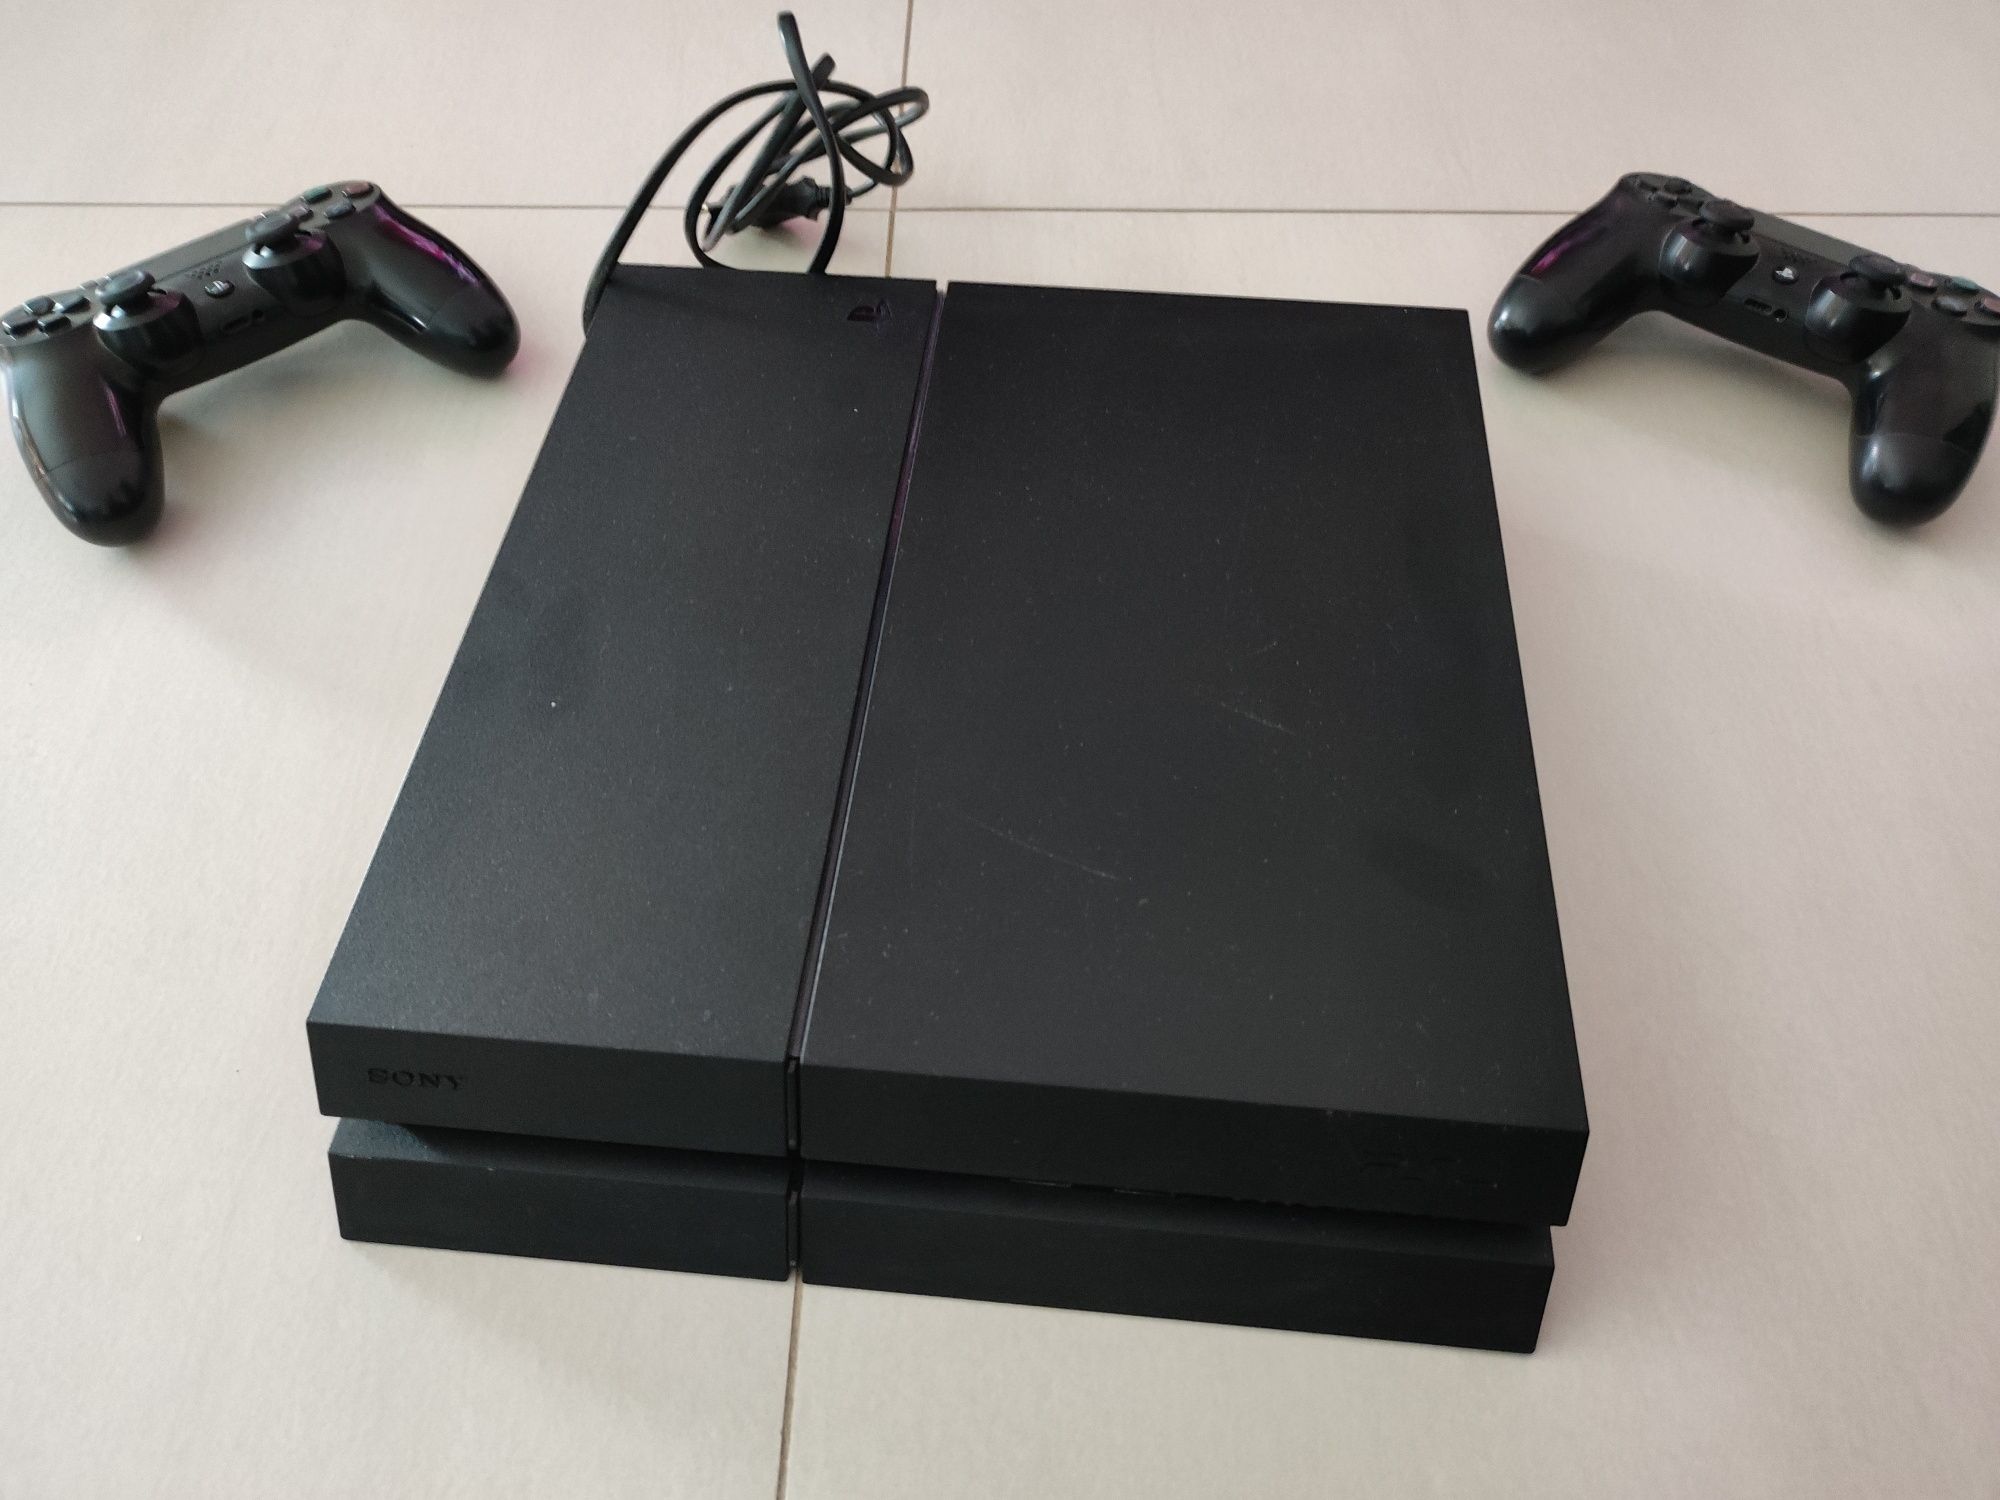 Konsola PlayStation 4 z padami i grami